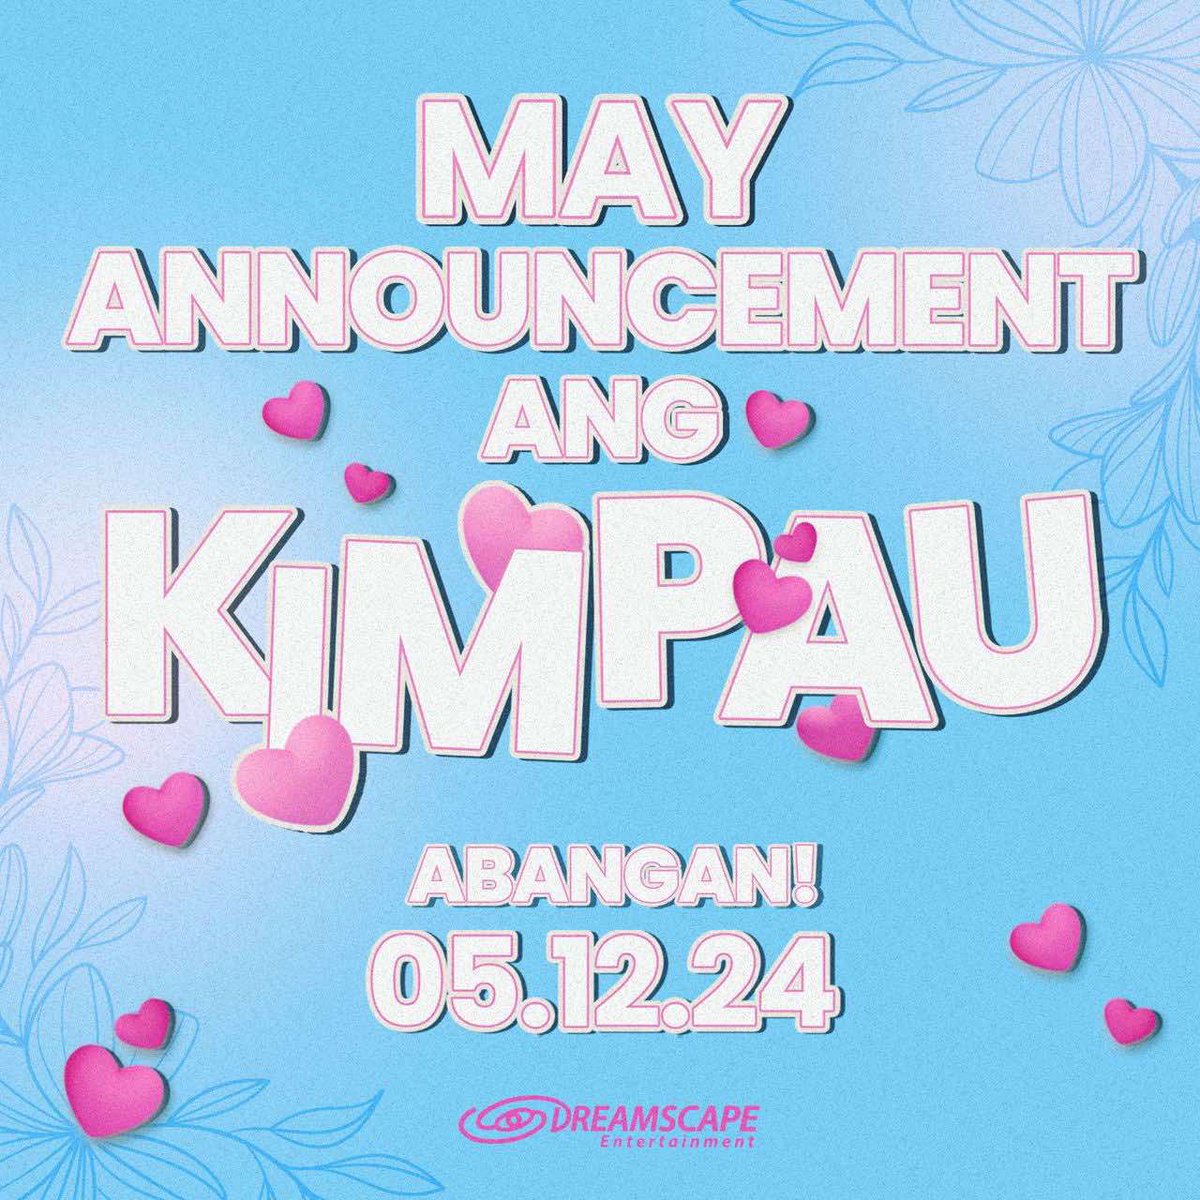 OMG!! Ano kayang meron?? 😱😱 Abangan this 05.12.24 💜 #KimPauAnnouncement #KimPau